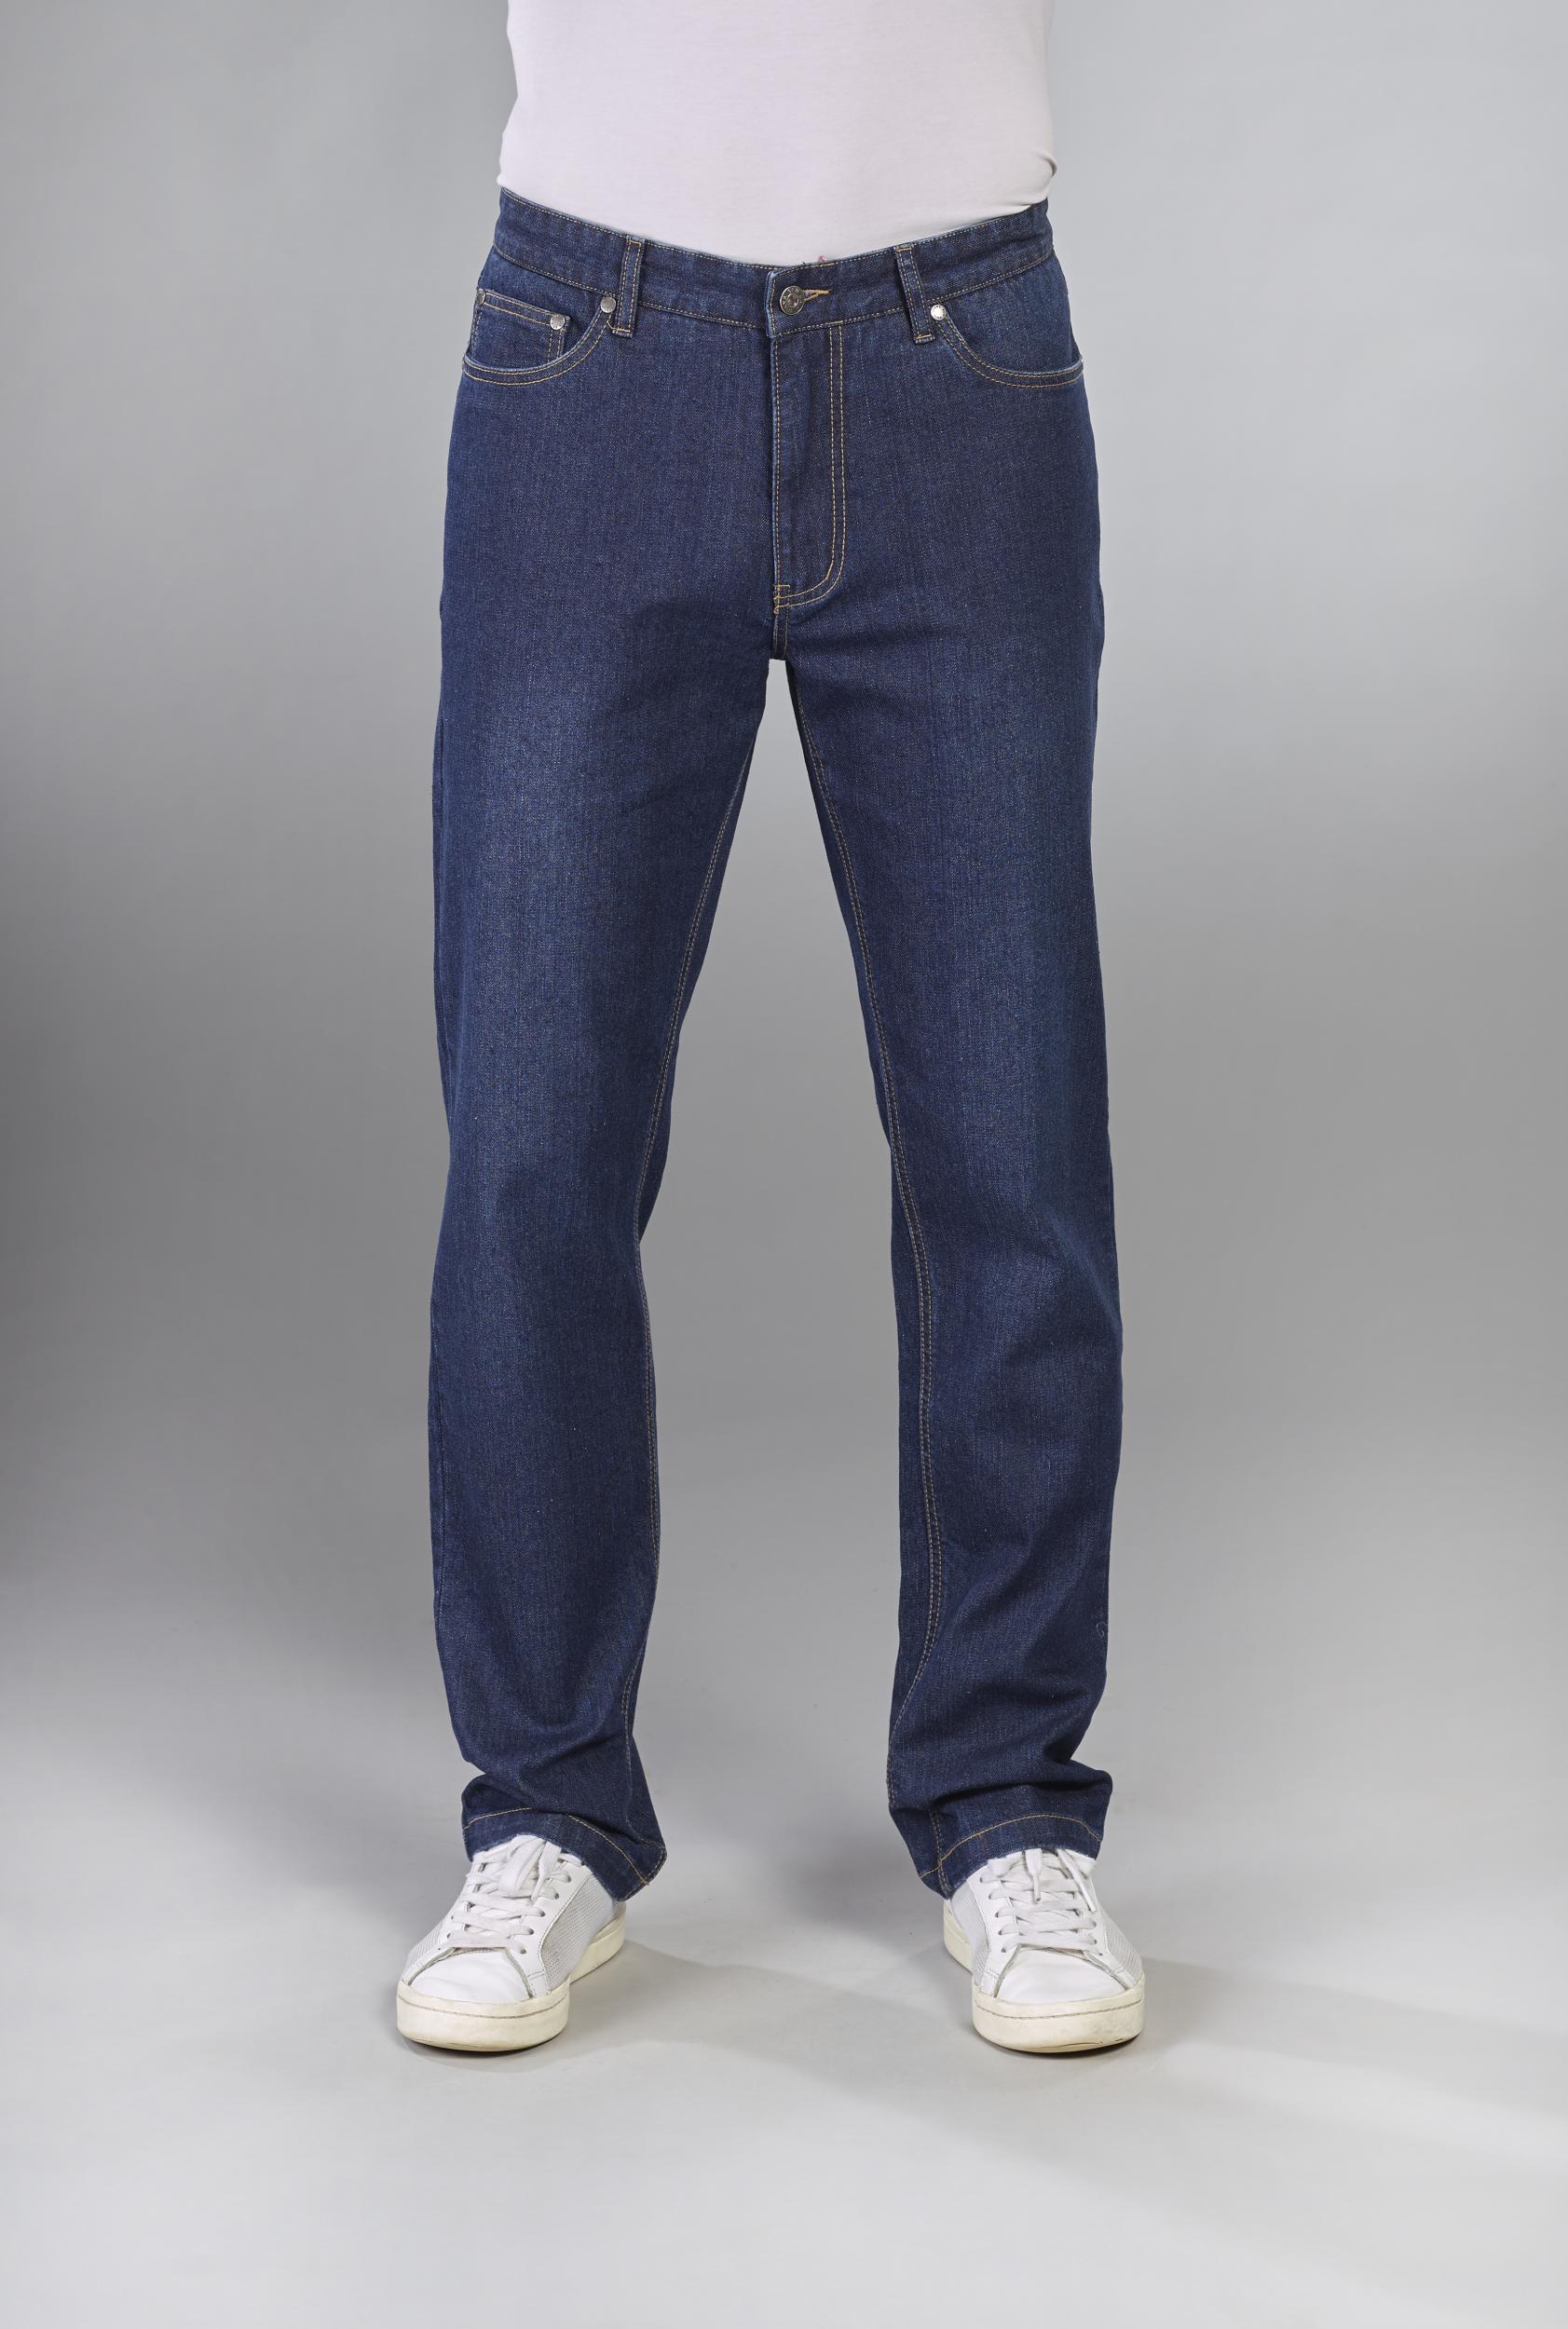 BEN BRIX Komfort Jeans, Regular Fit, Farbe dark blue